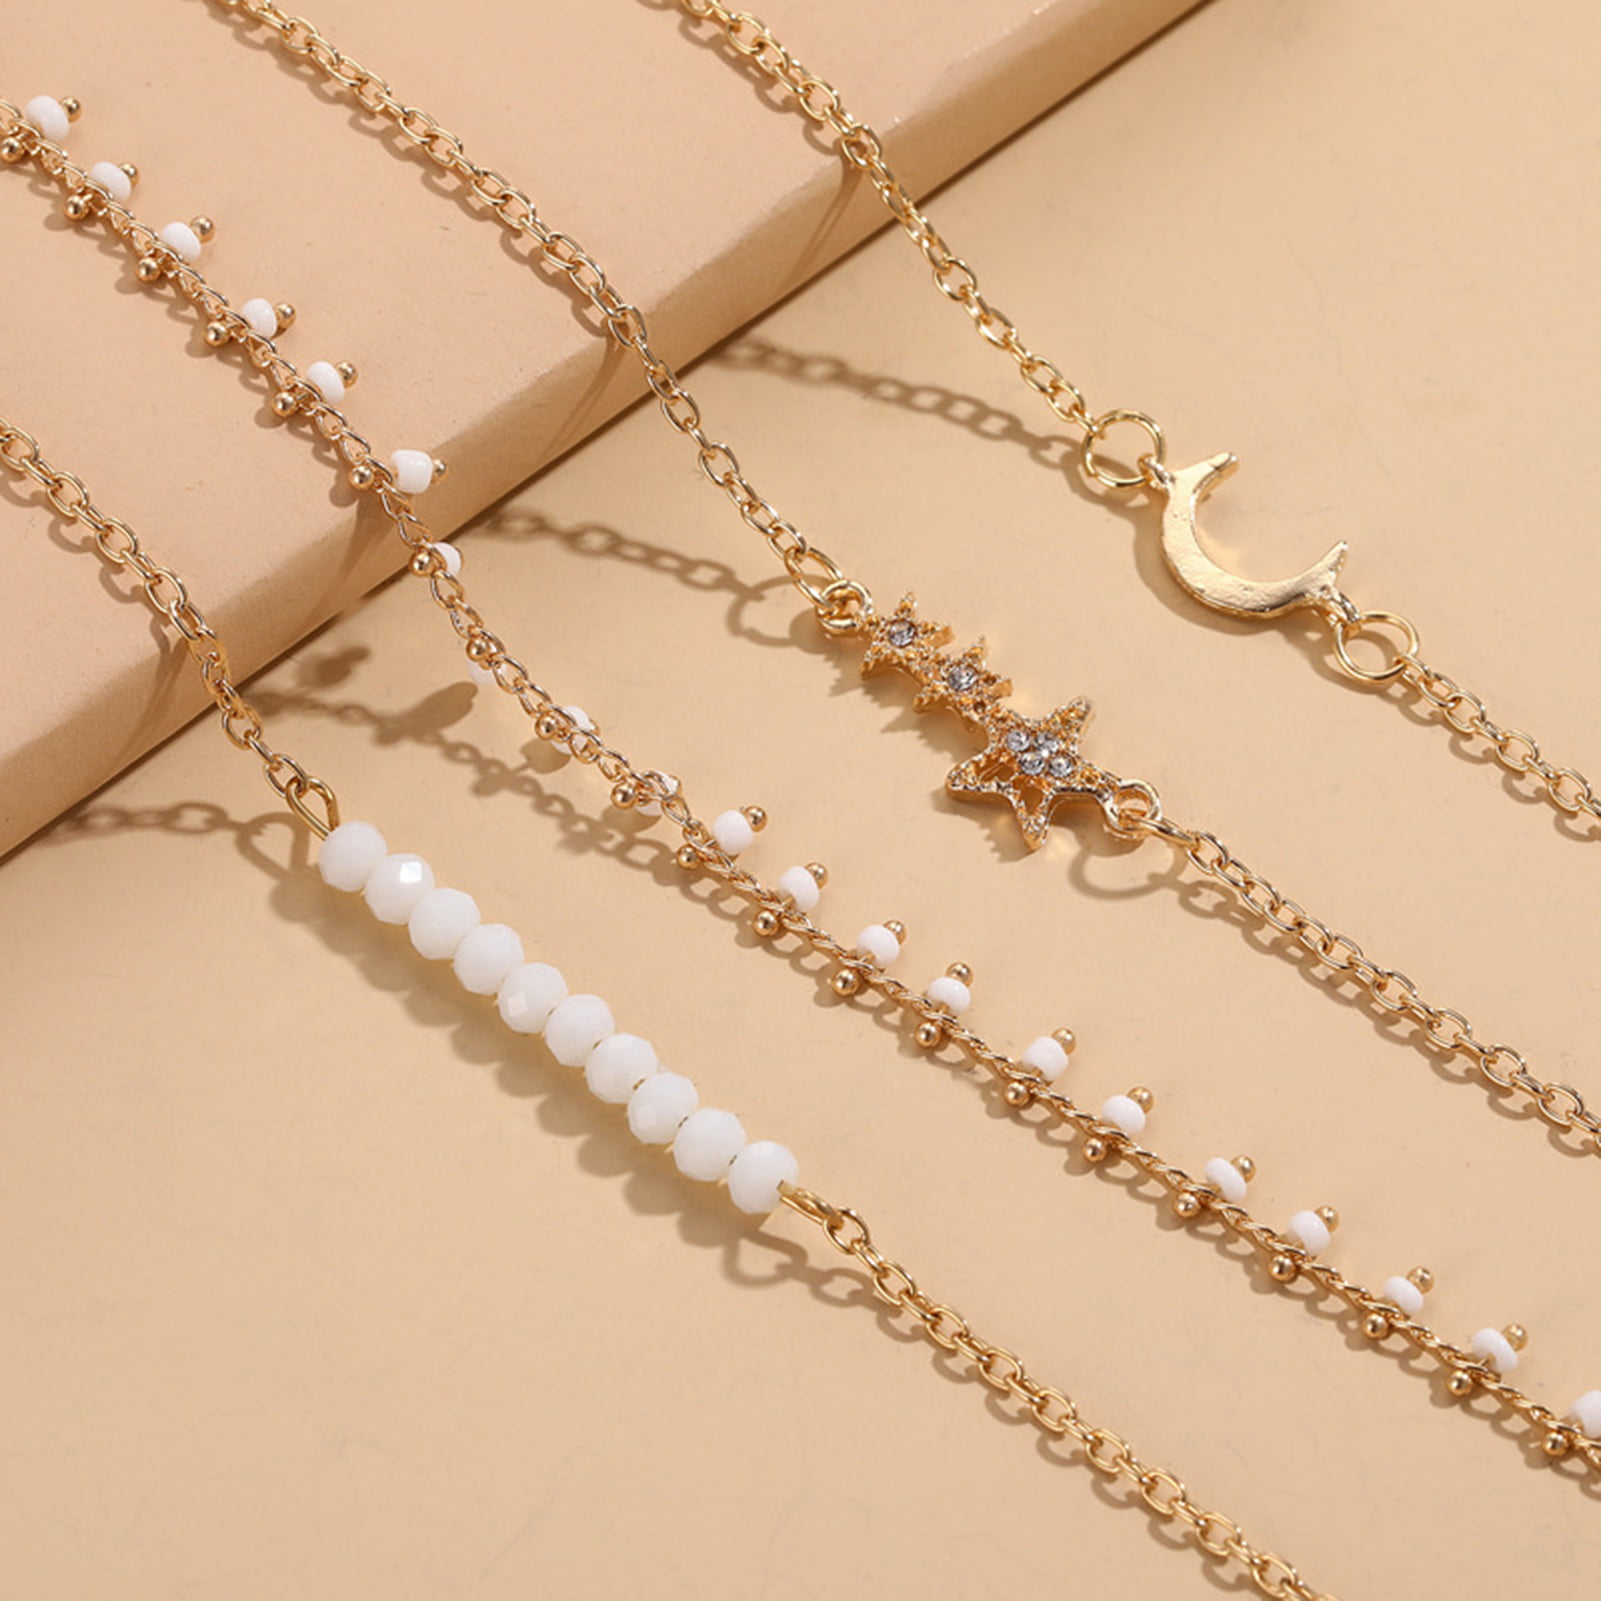 WUSUANED Rose Gold Initial Bracelet Letter Bracelet Adjustable Chain Bracelet Personalized Jewelry for Women Girls